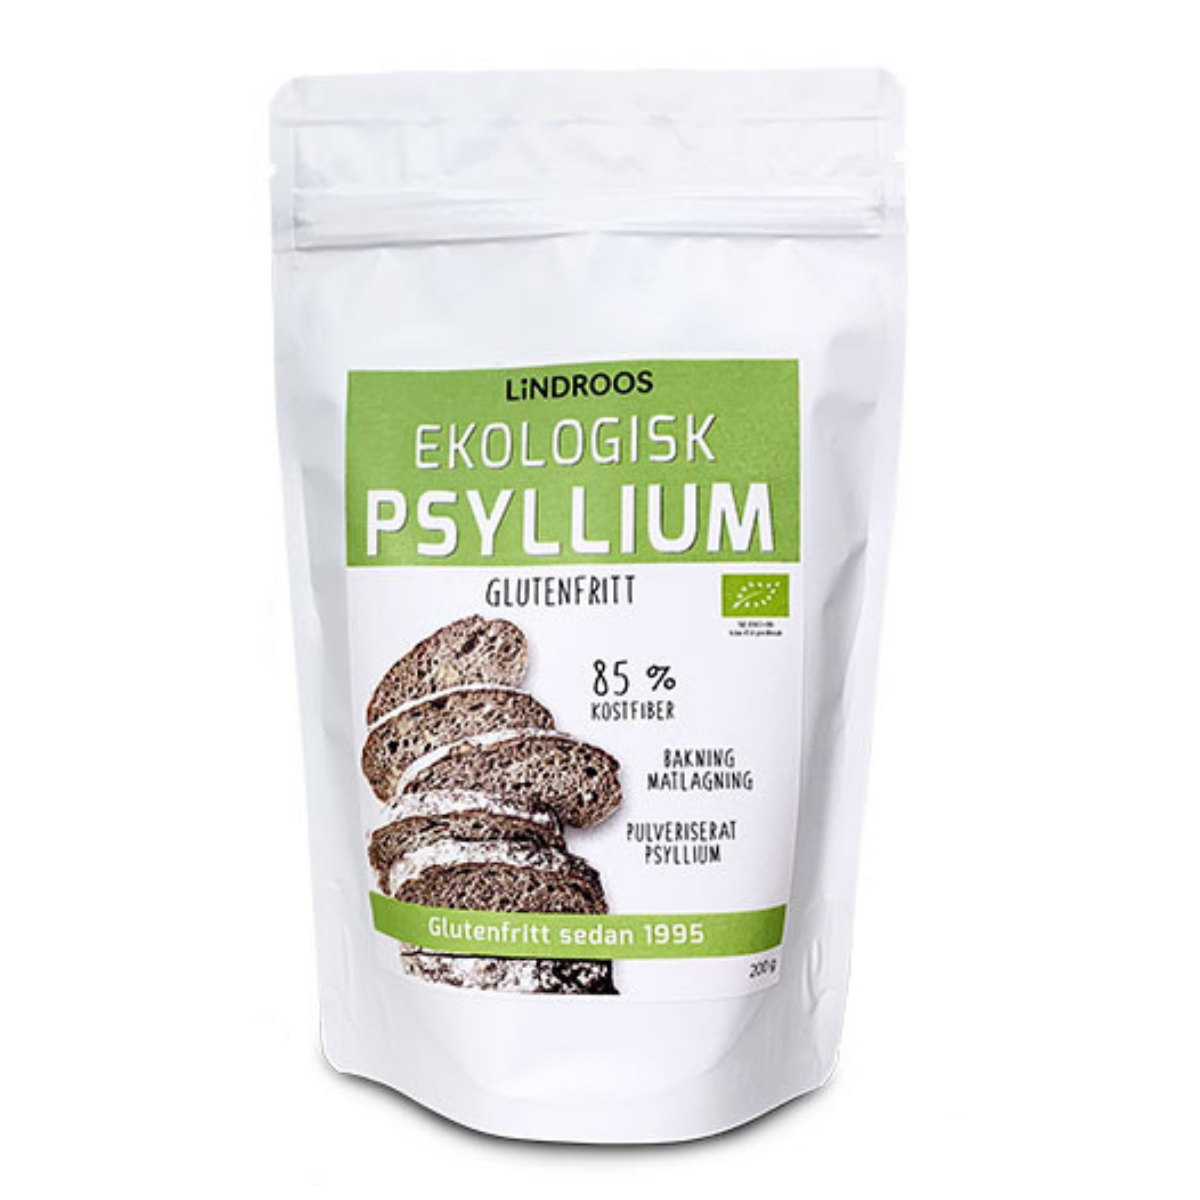 Lindroos Hälsa's Organic Psyllium - Powdered '